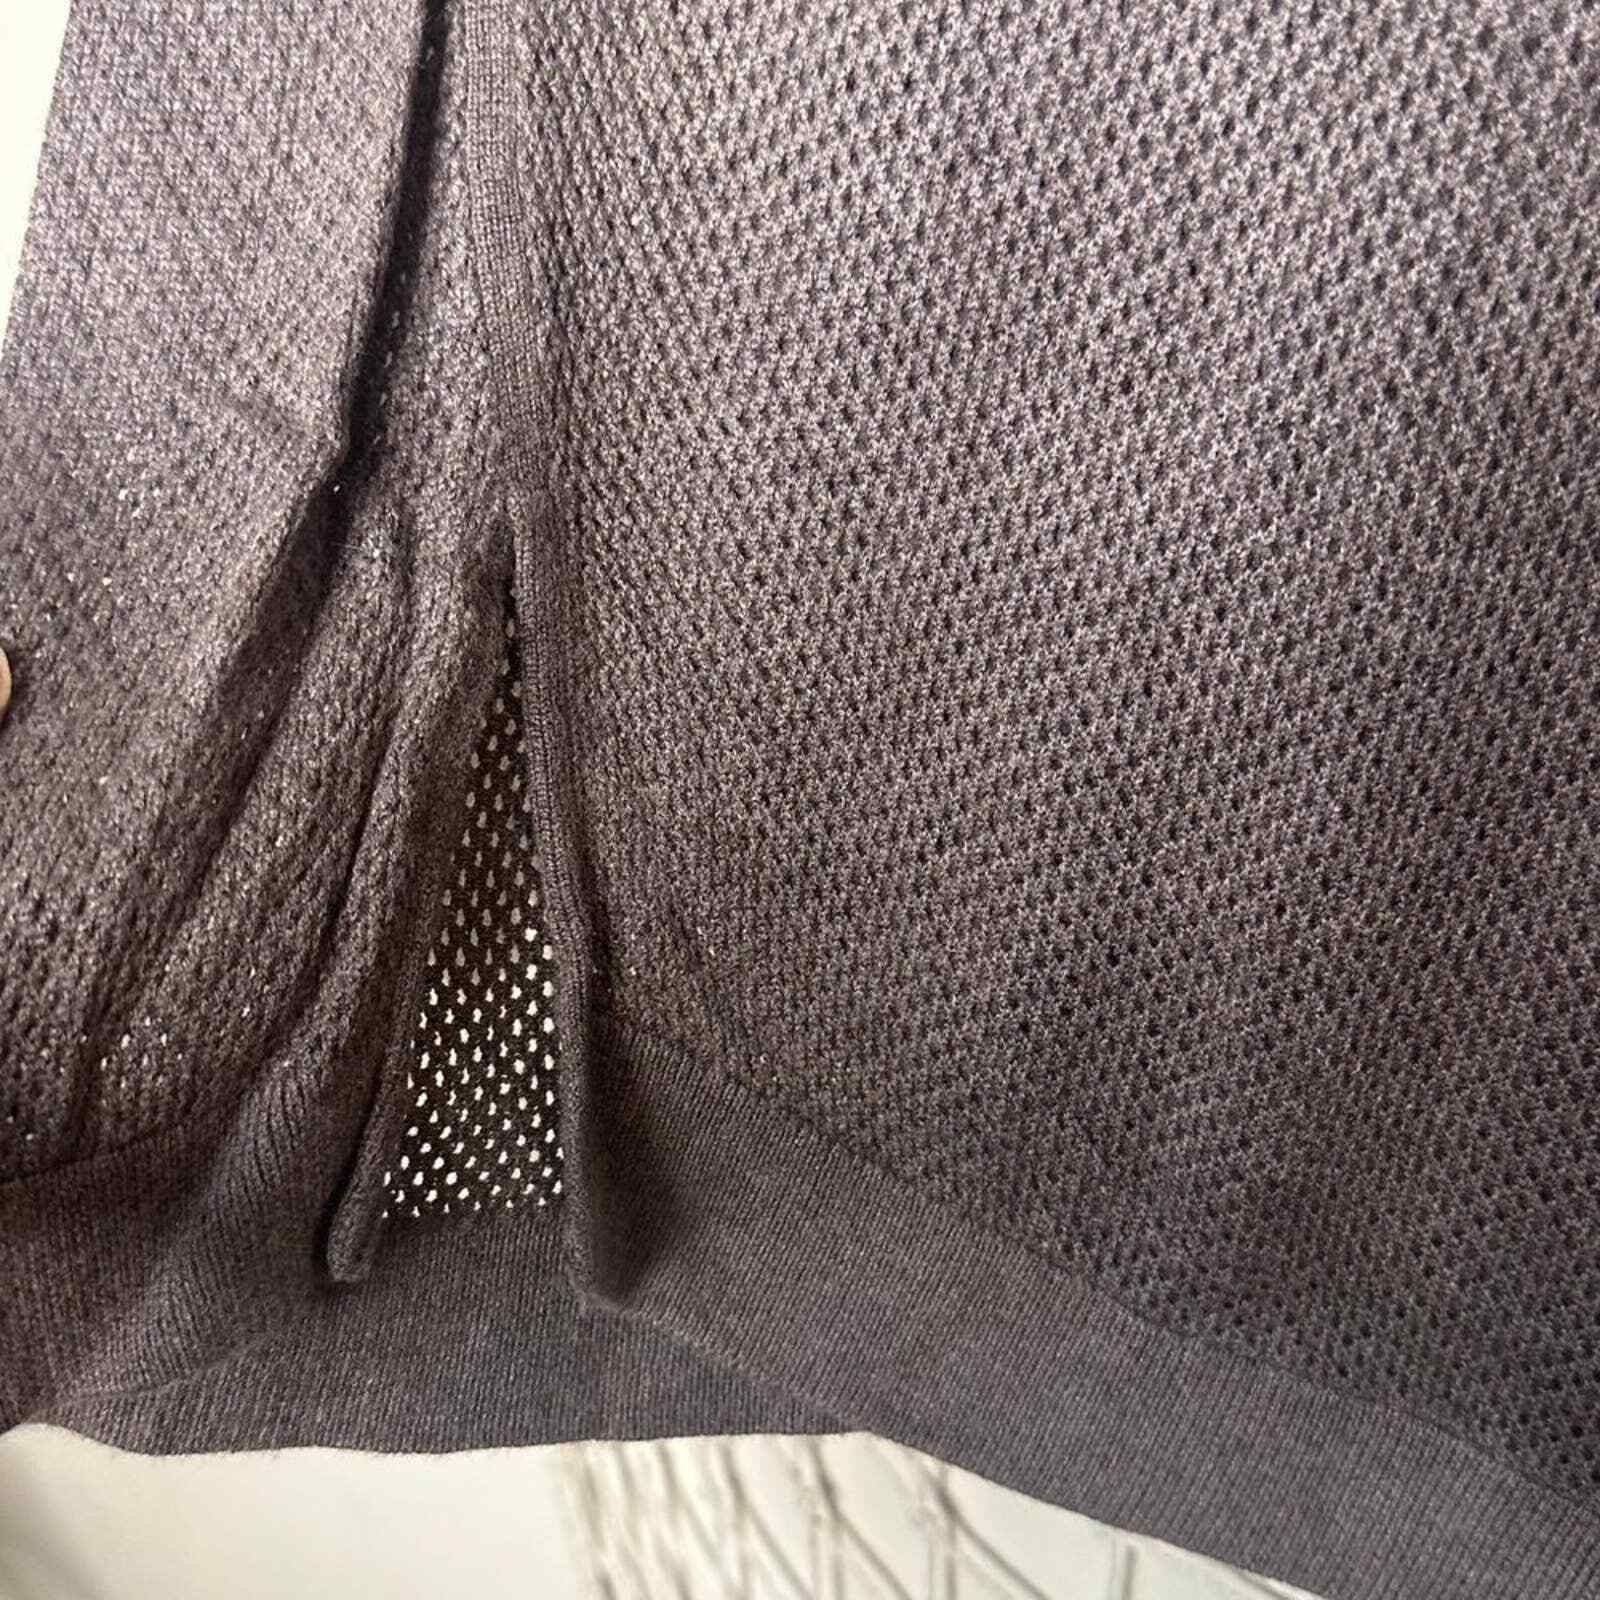 EXPRESS Cocoa Brown Knit Sweater Mini Dress or Tu… - image 4